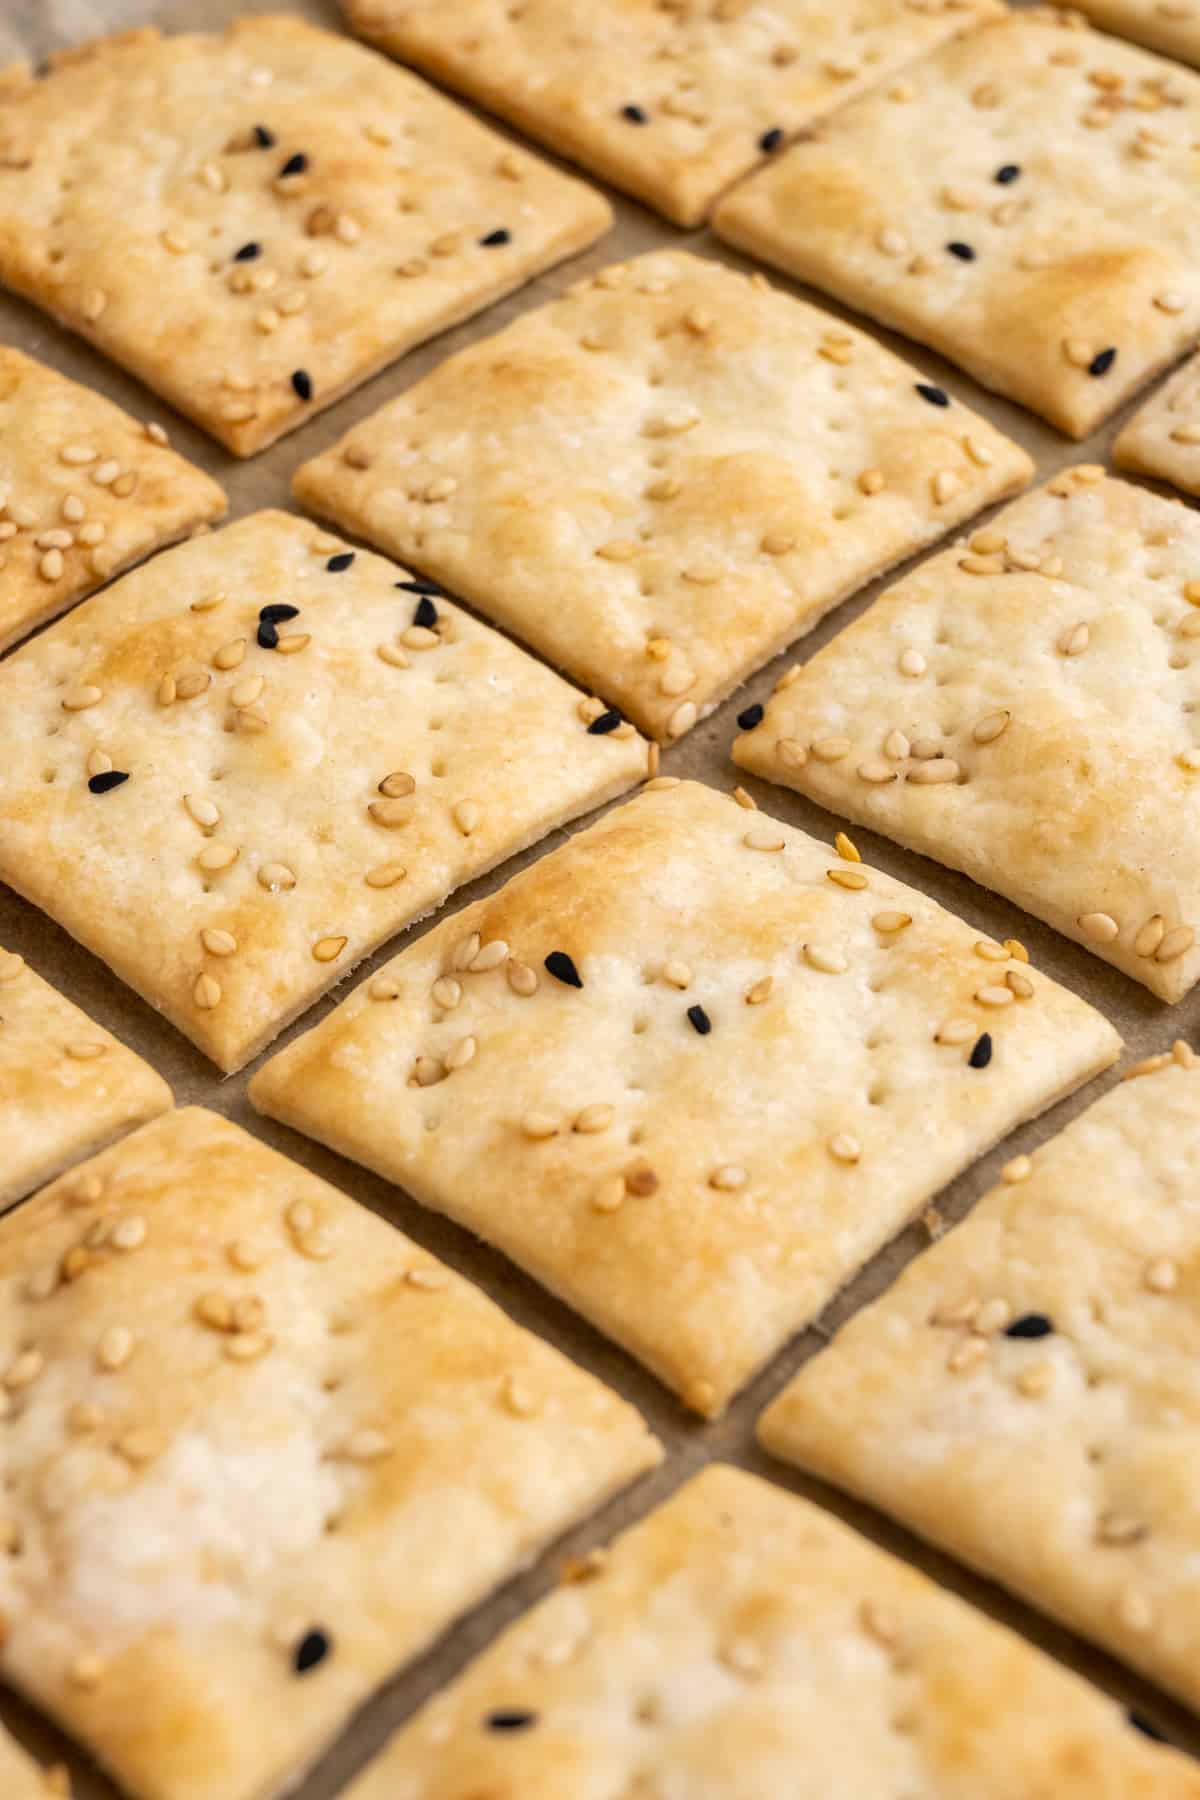 Diamond shaped sourdough crackers on a baking tray.